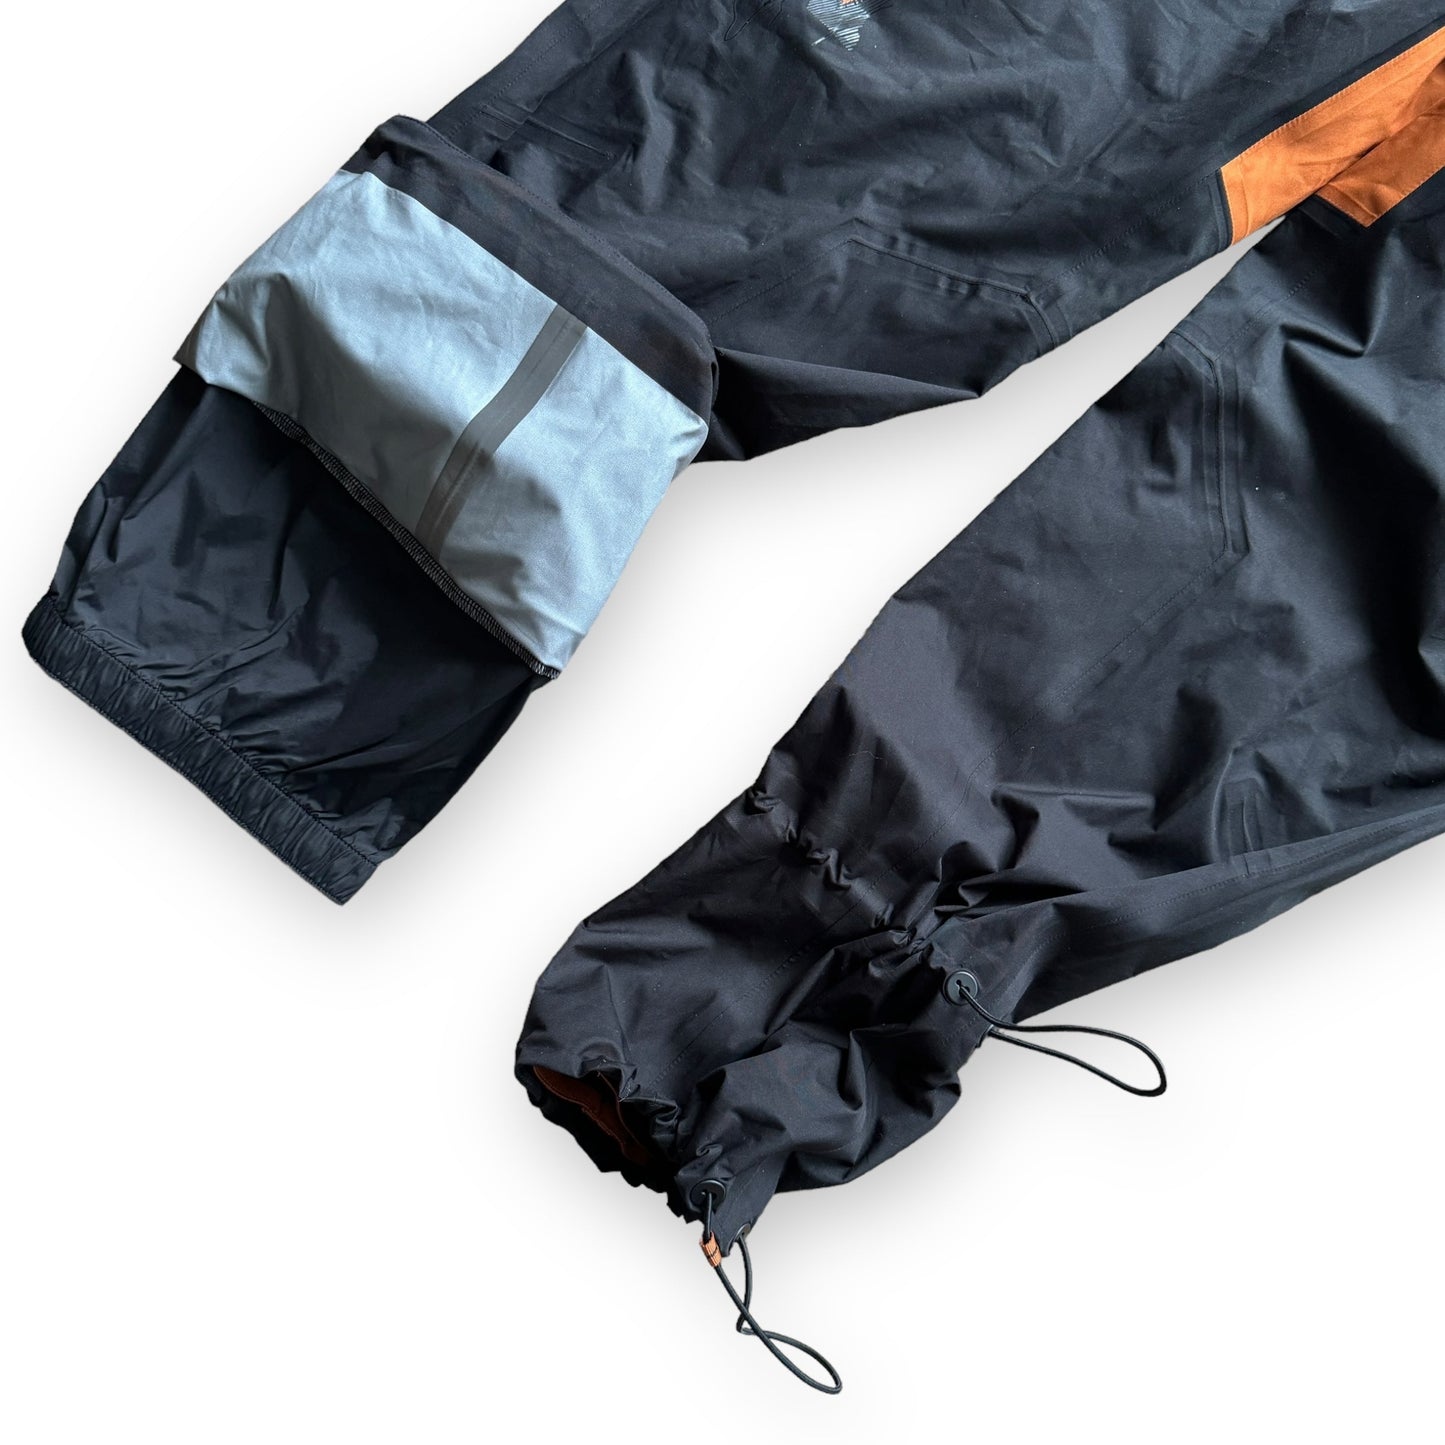 Ermenegildo Zegna Technical 3L Waterproof Trousers - Brand New